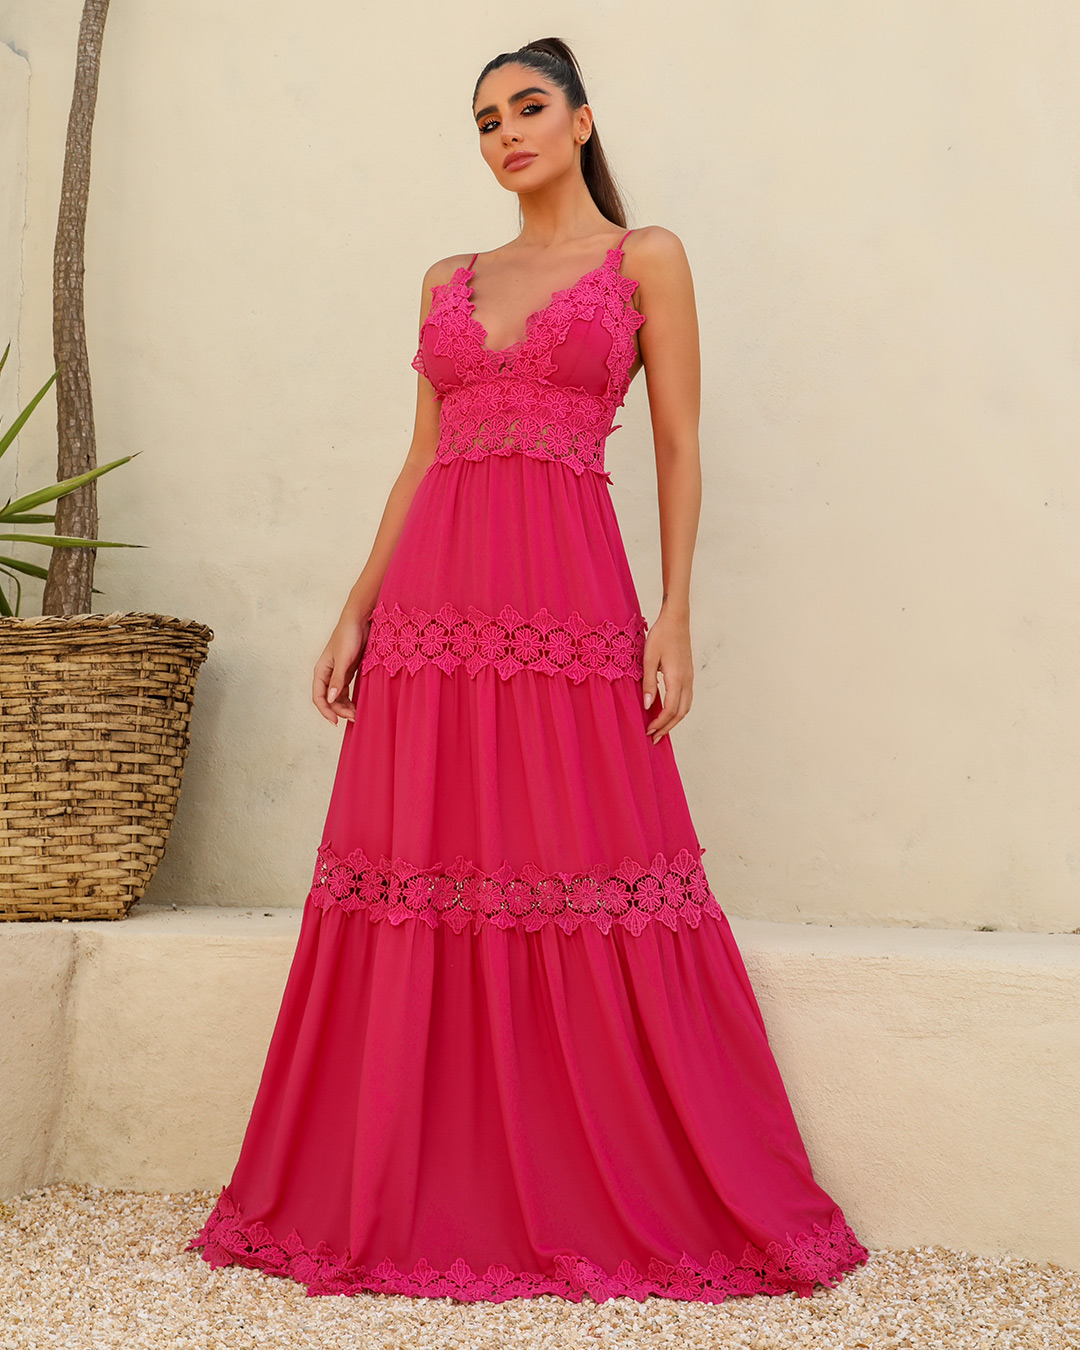 Dot Clothing - Dress Dot Clothing Long Lace Pink - 1546ROSA